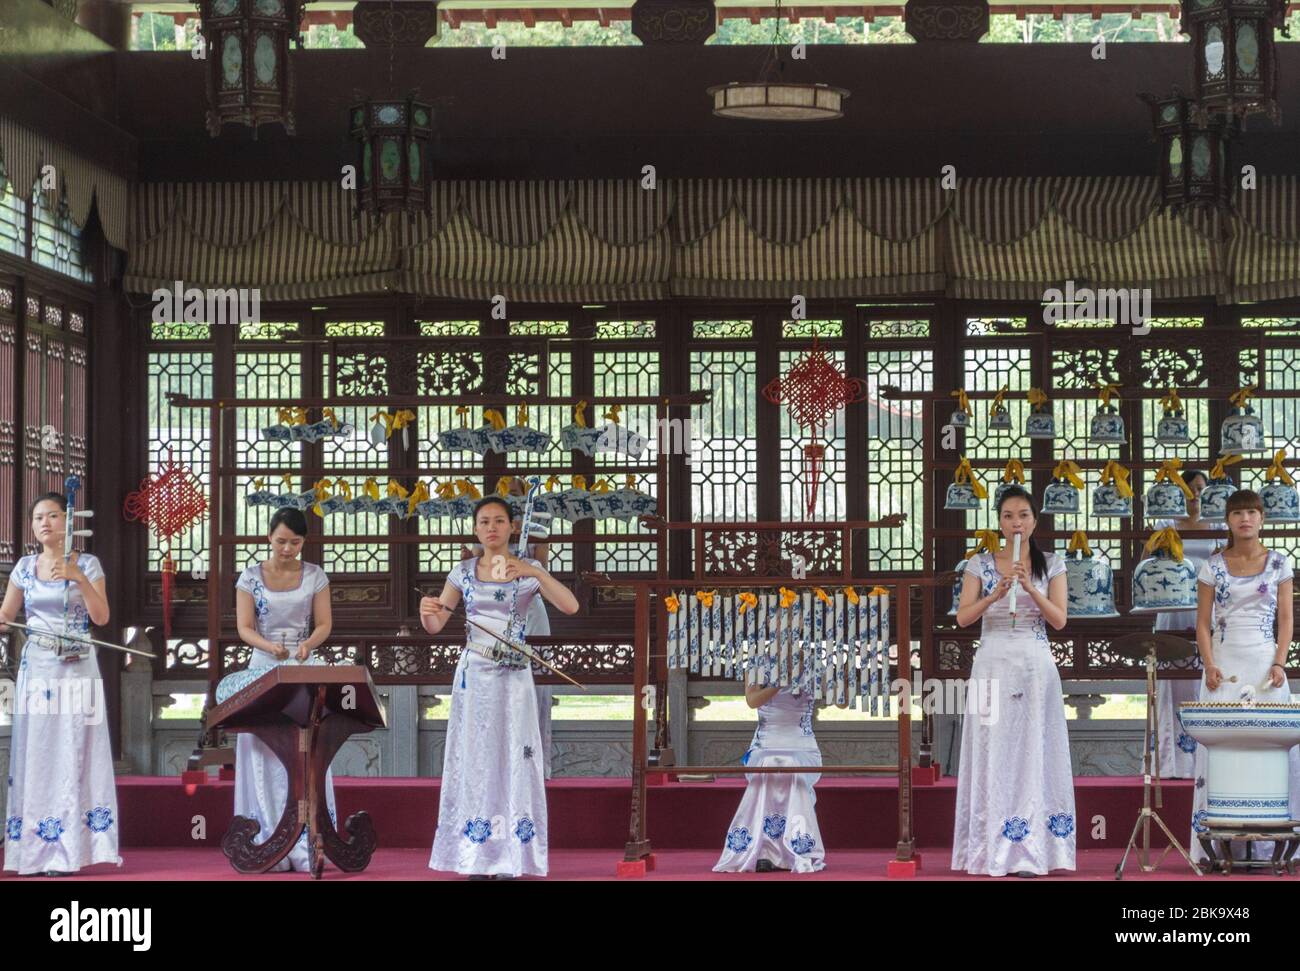 Jingdezhen, Jiangxi province / China - May 29, 2014: Female music ensemble performing traditional Chinese music on porcelain instruments in Jingdezhen Stock Photo